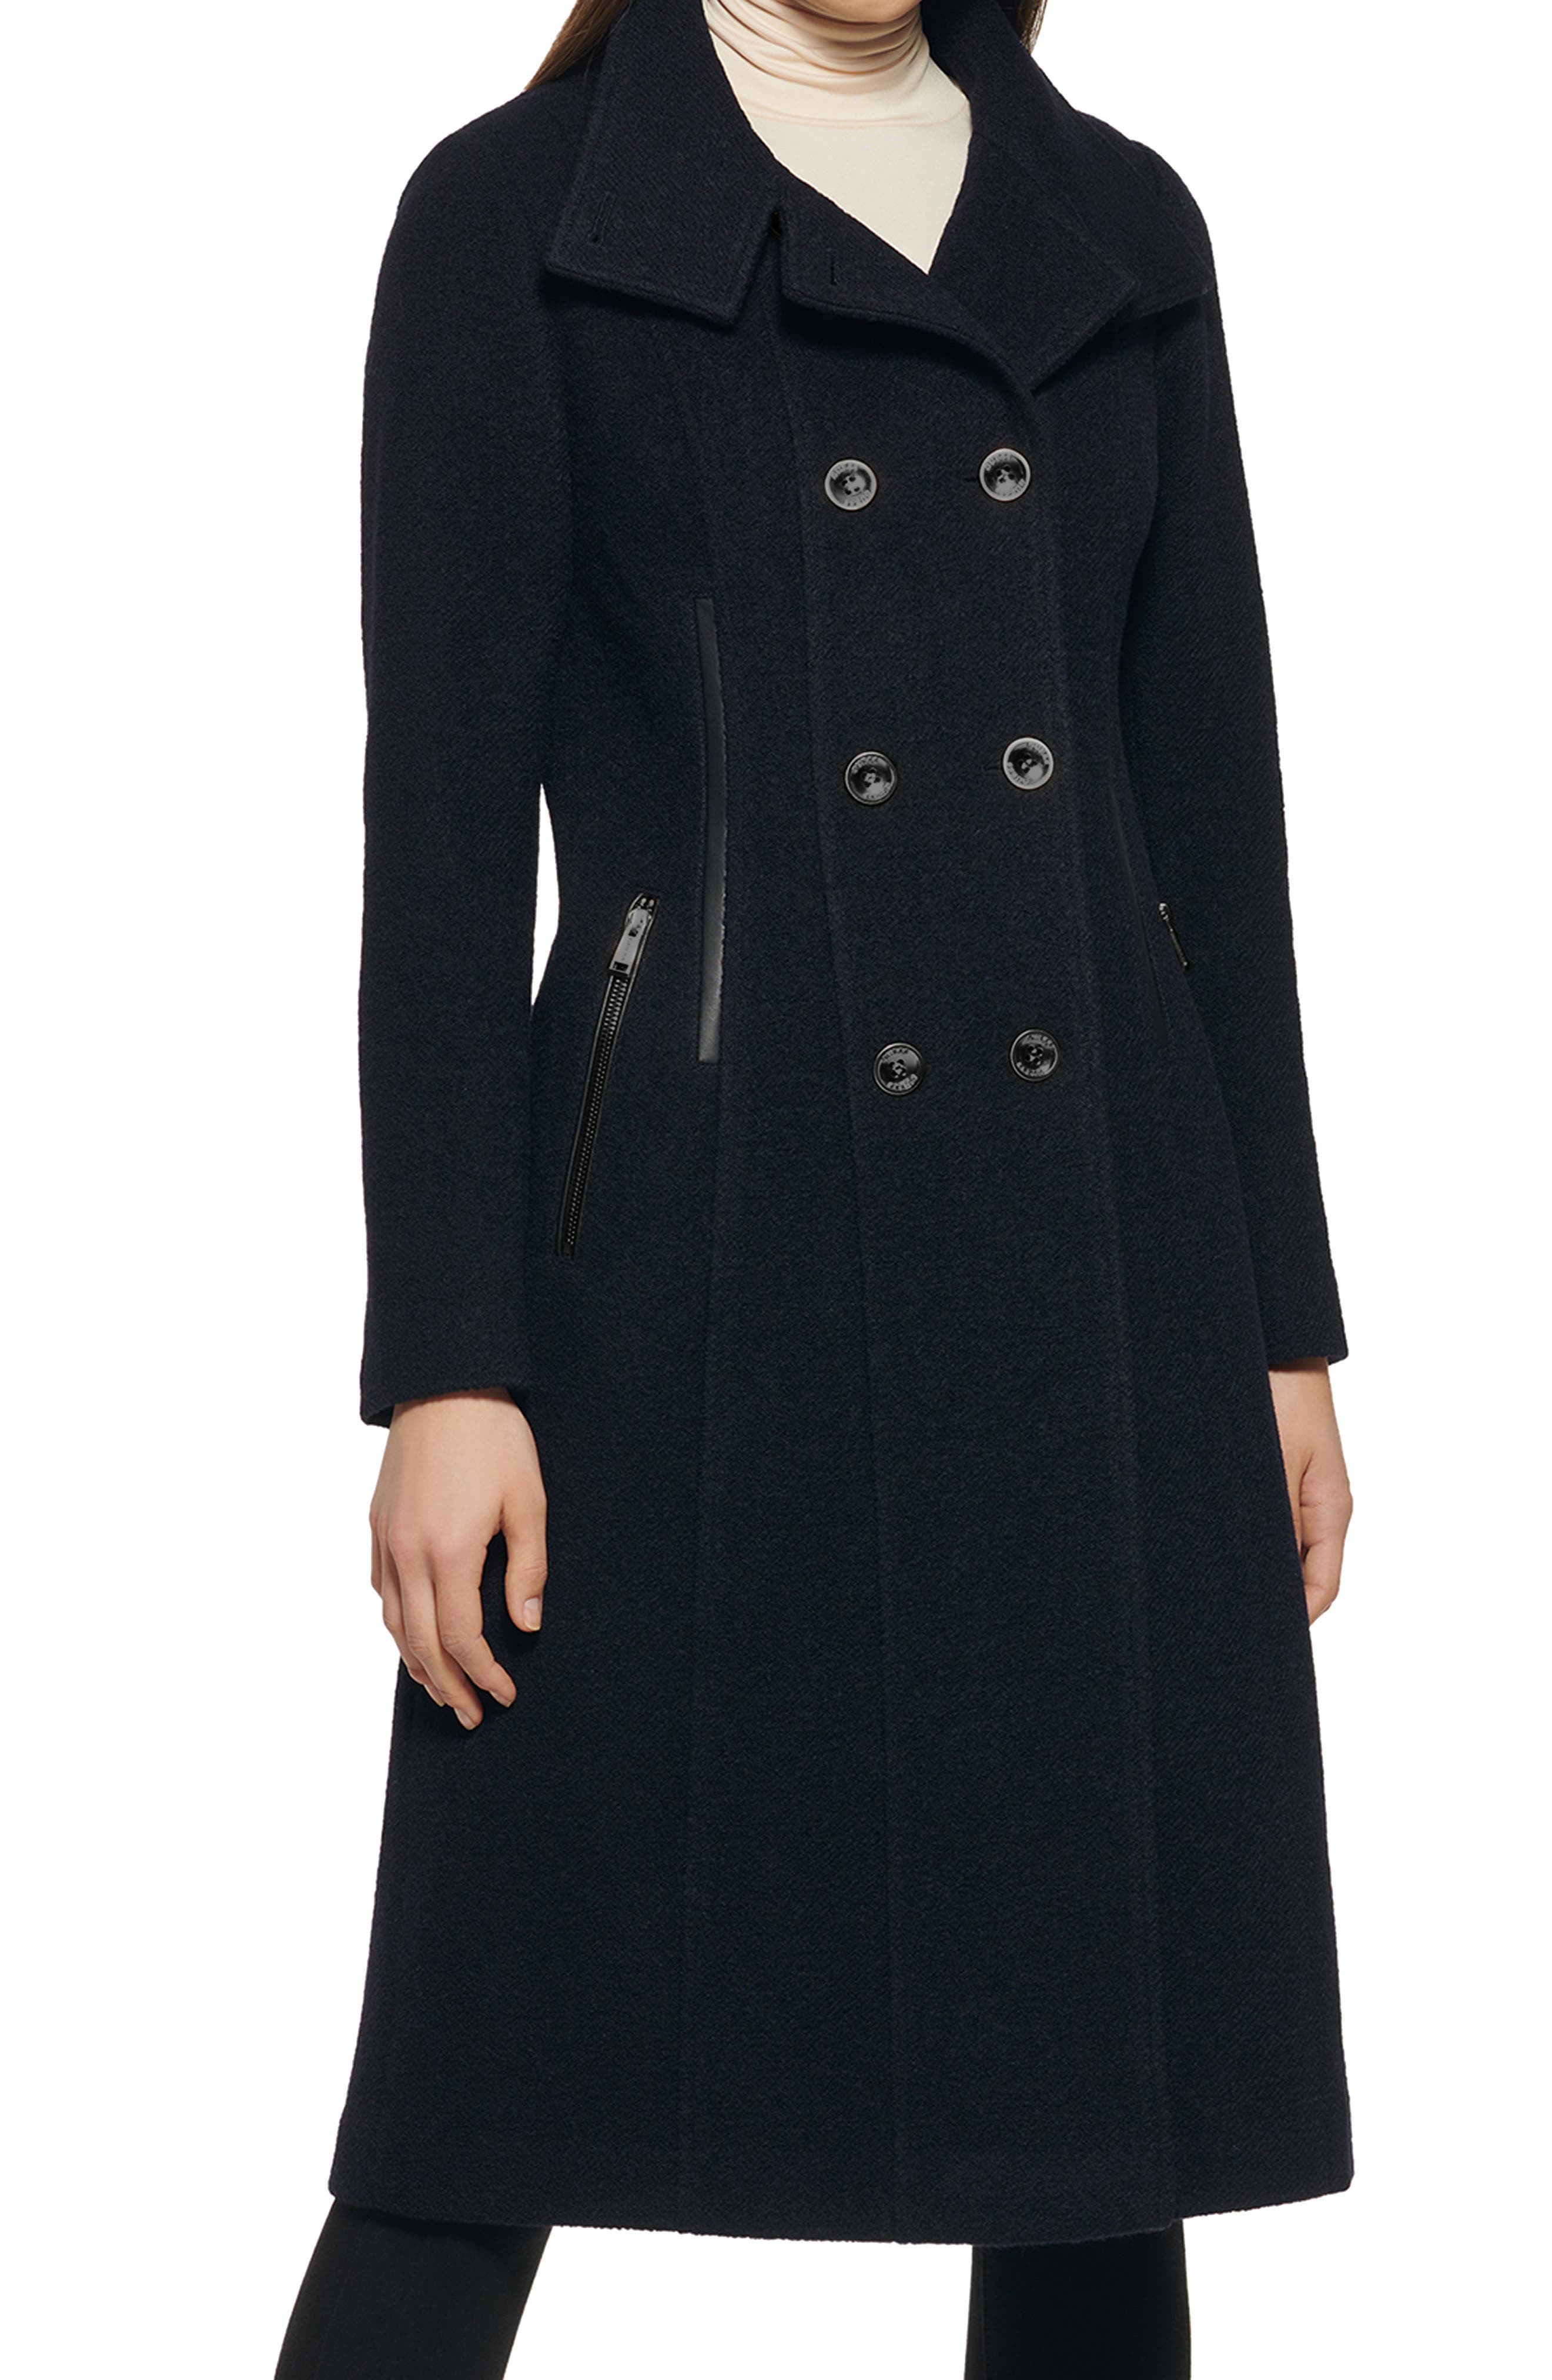 Sinpiling Women/'s Turn Down Shawl Collar Wool Blend Coat Winter Fashion Belted Trench Outerwear Asymmetric Hem Wrap Coat